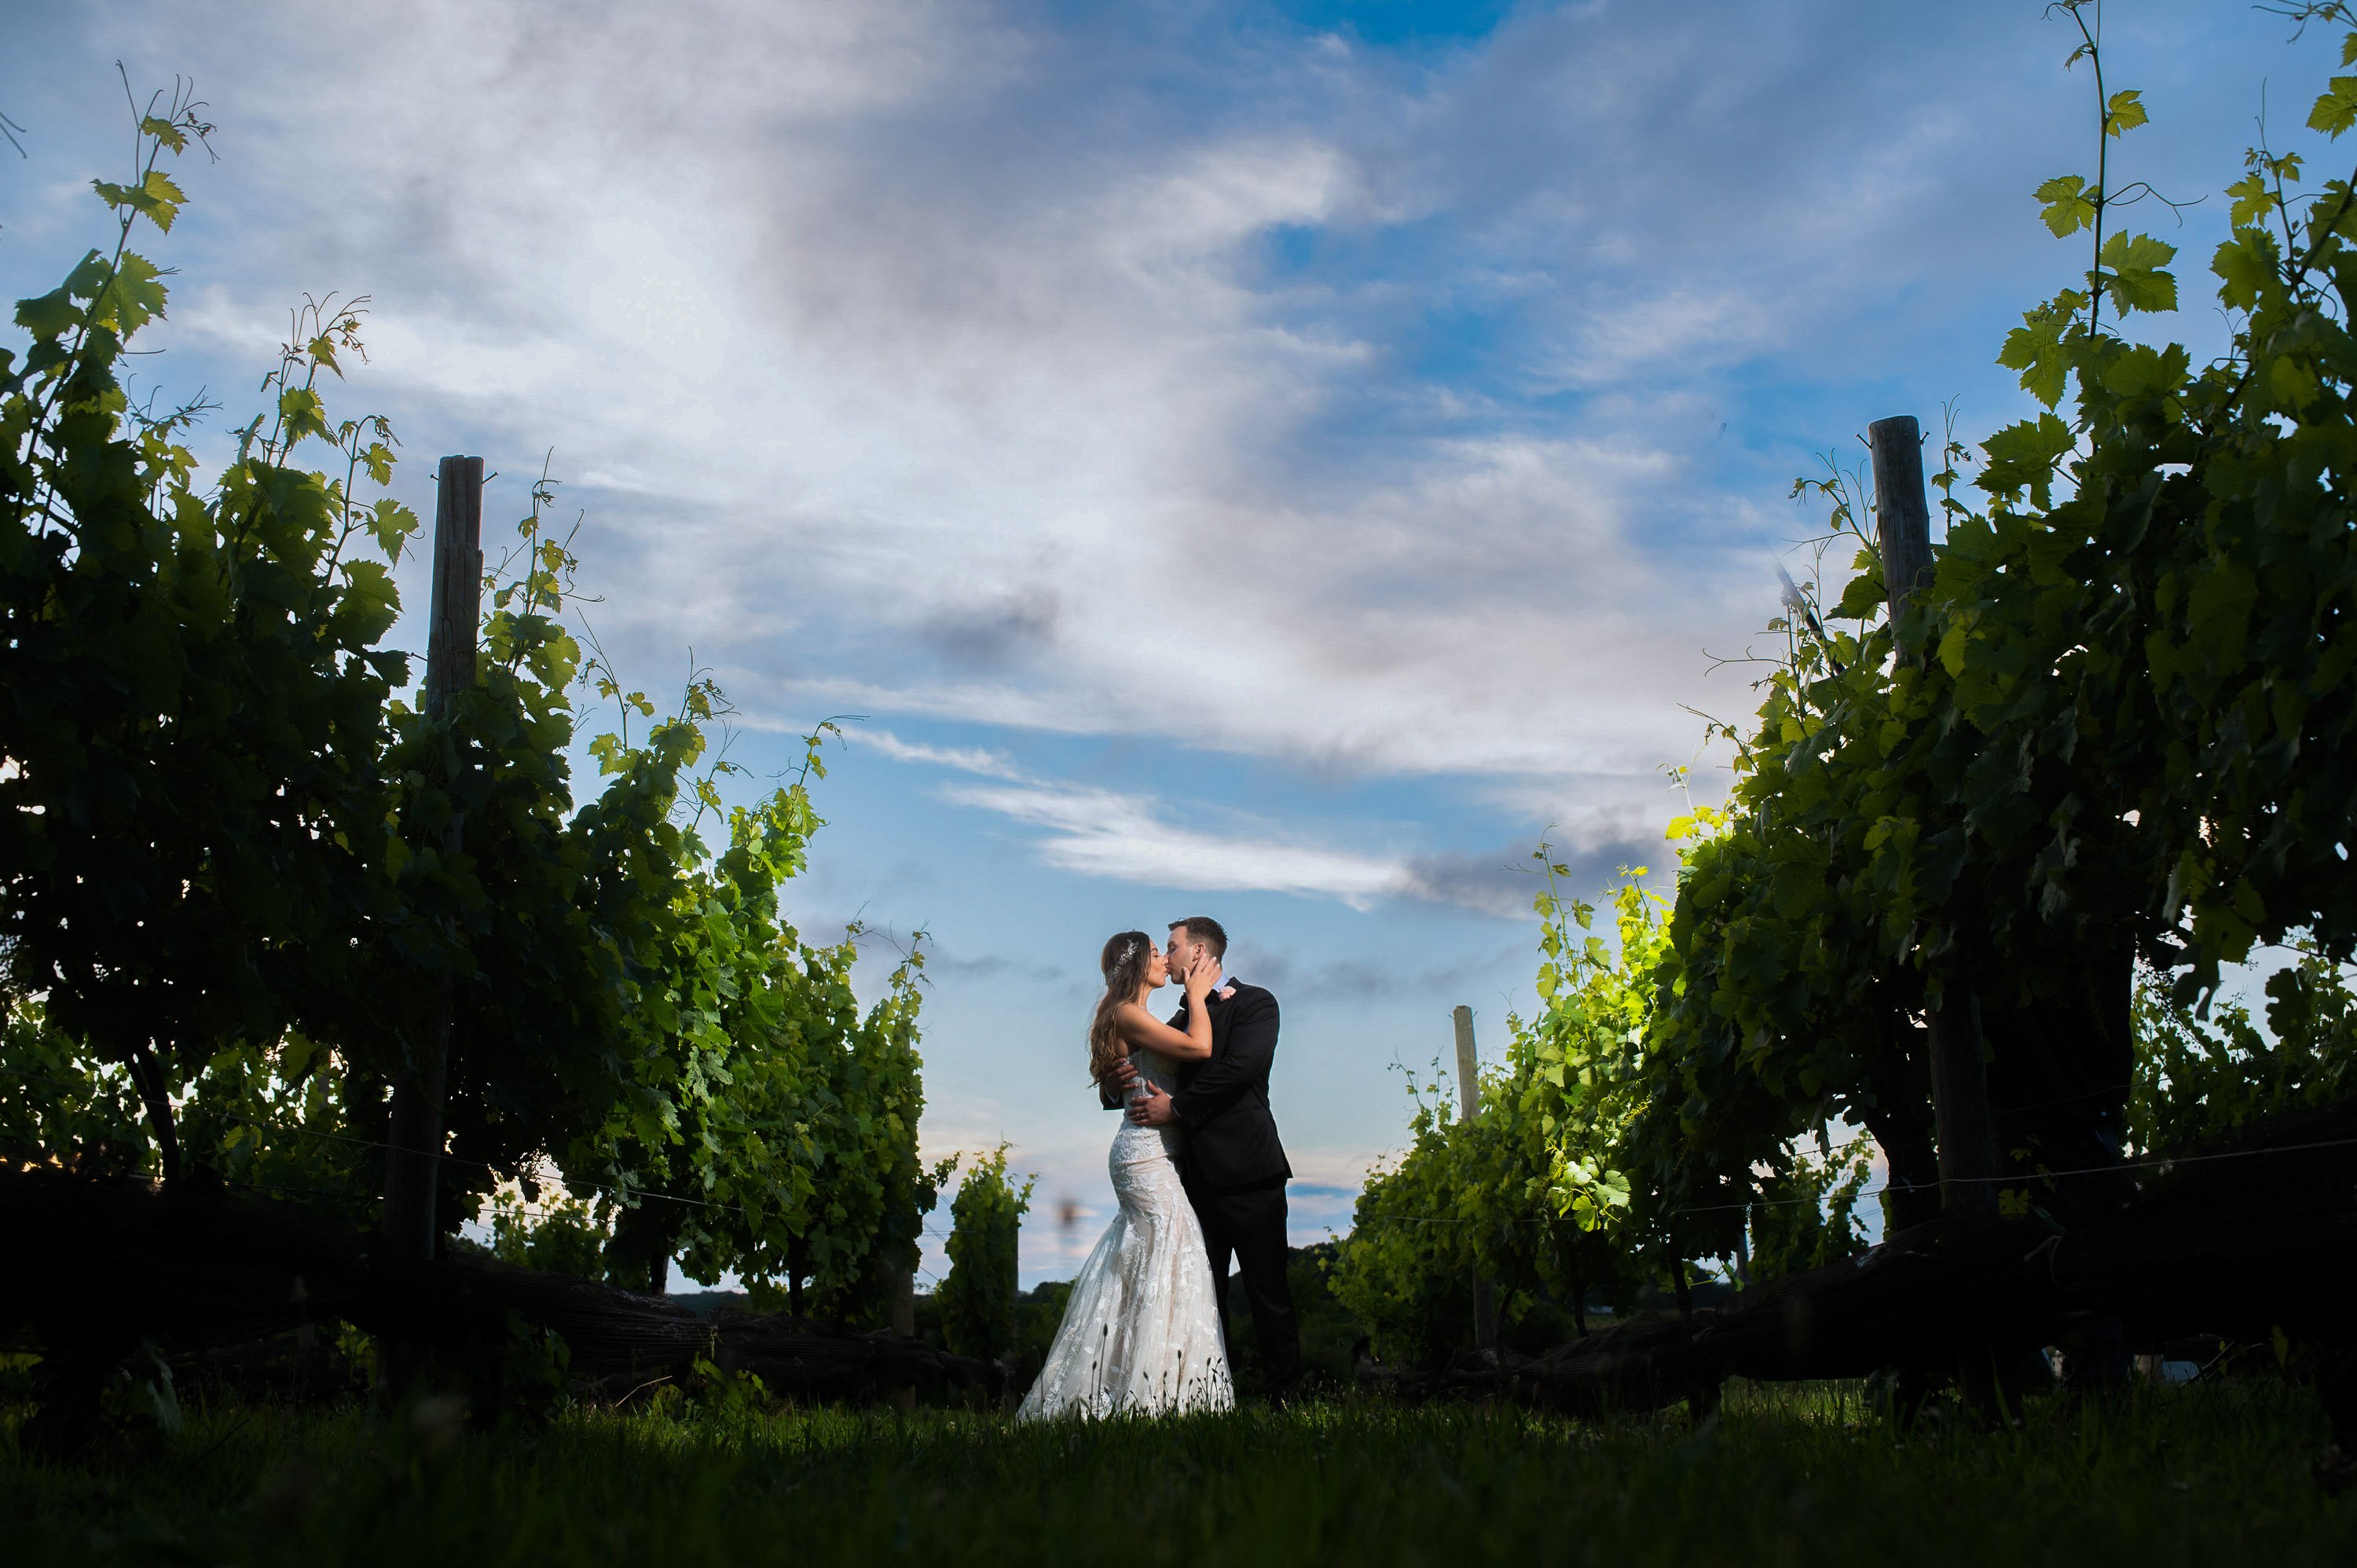 The Vineyards at Aquebogue - Real Wedding Photos